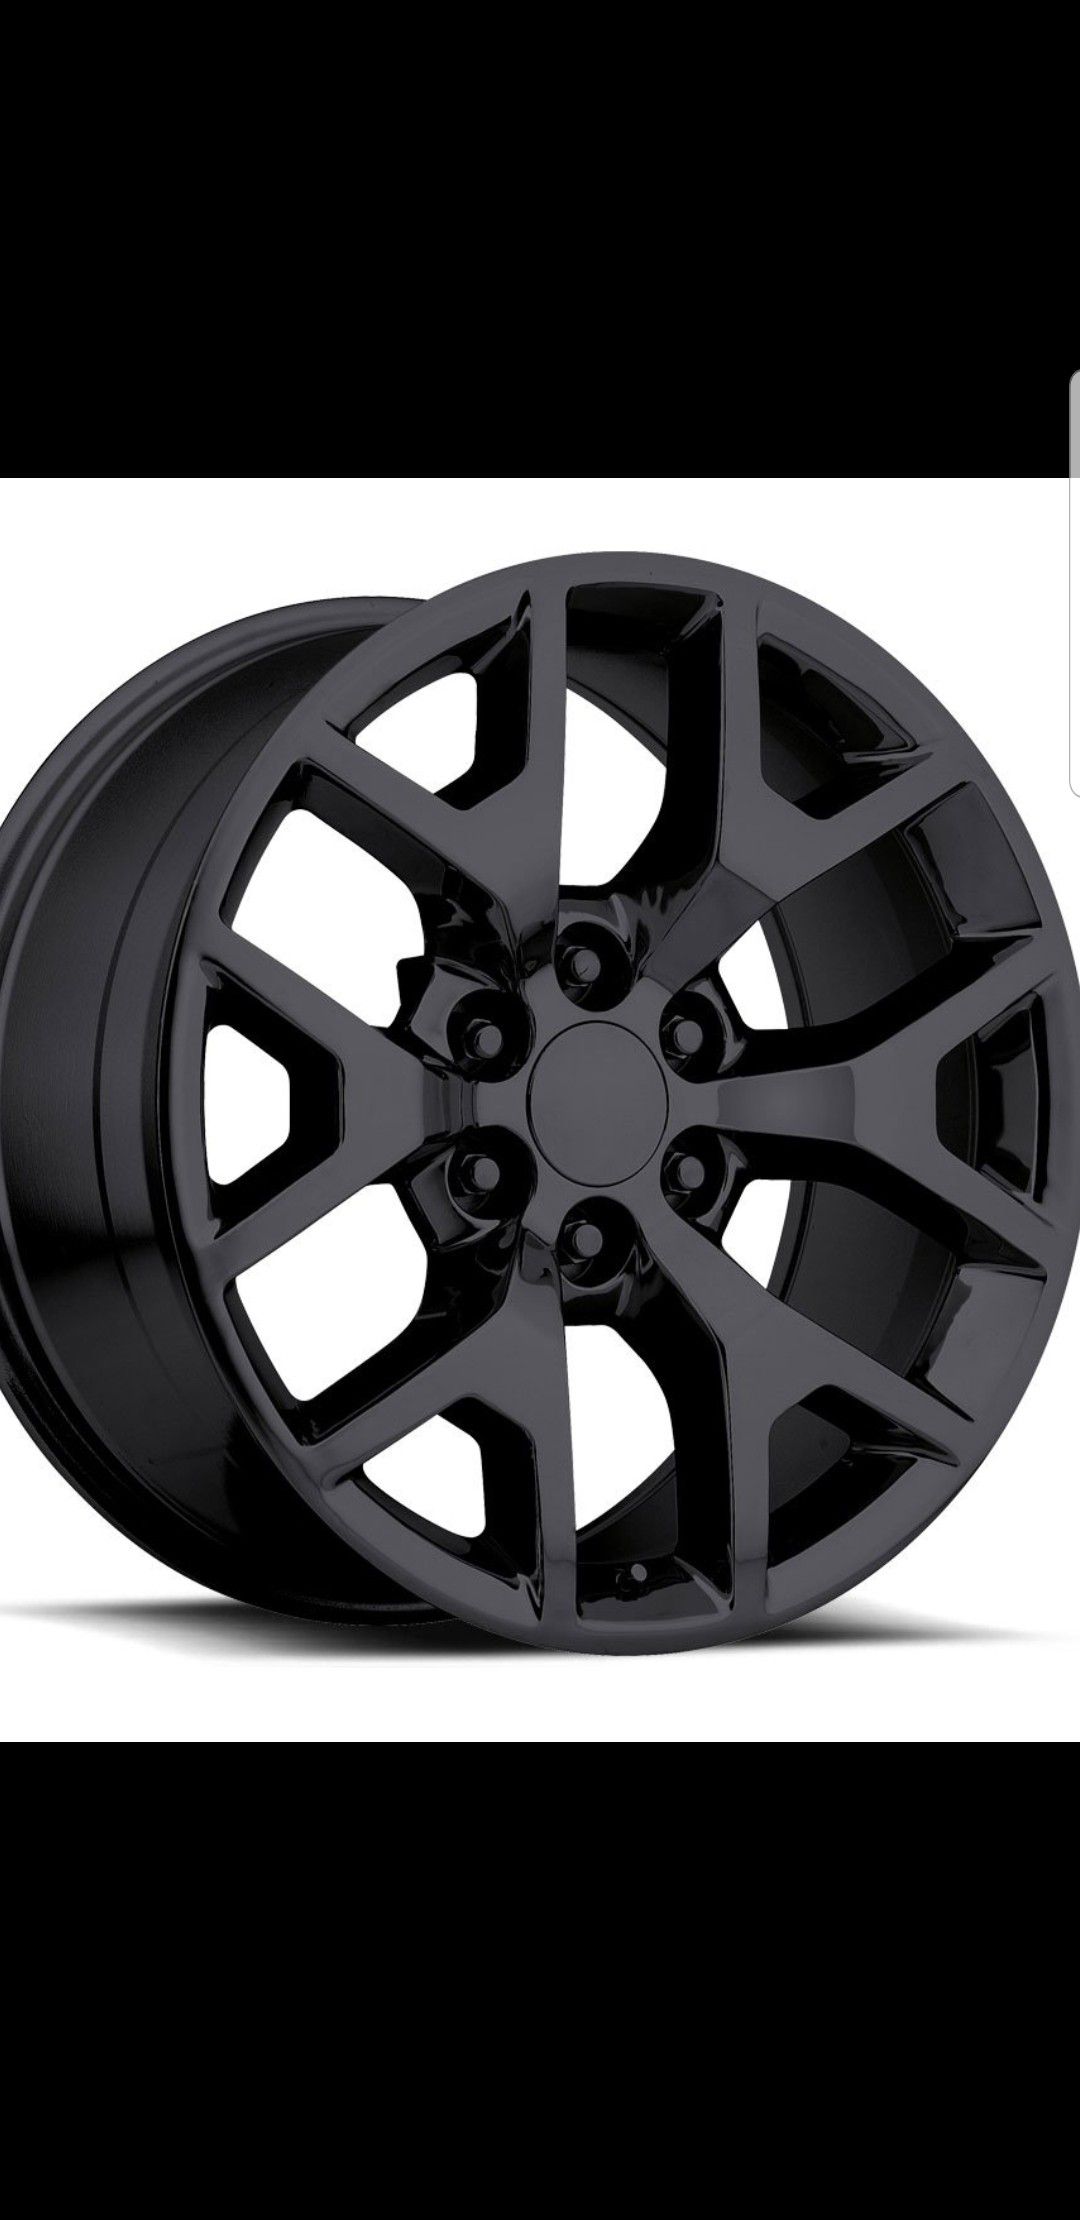 Replica wheels black Friday special